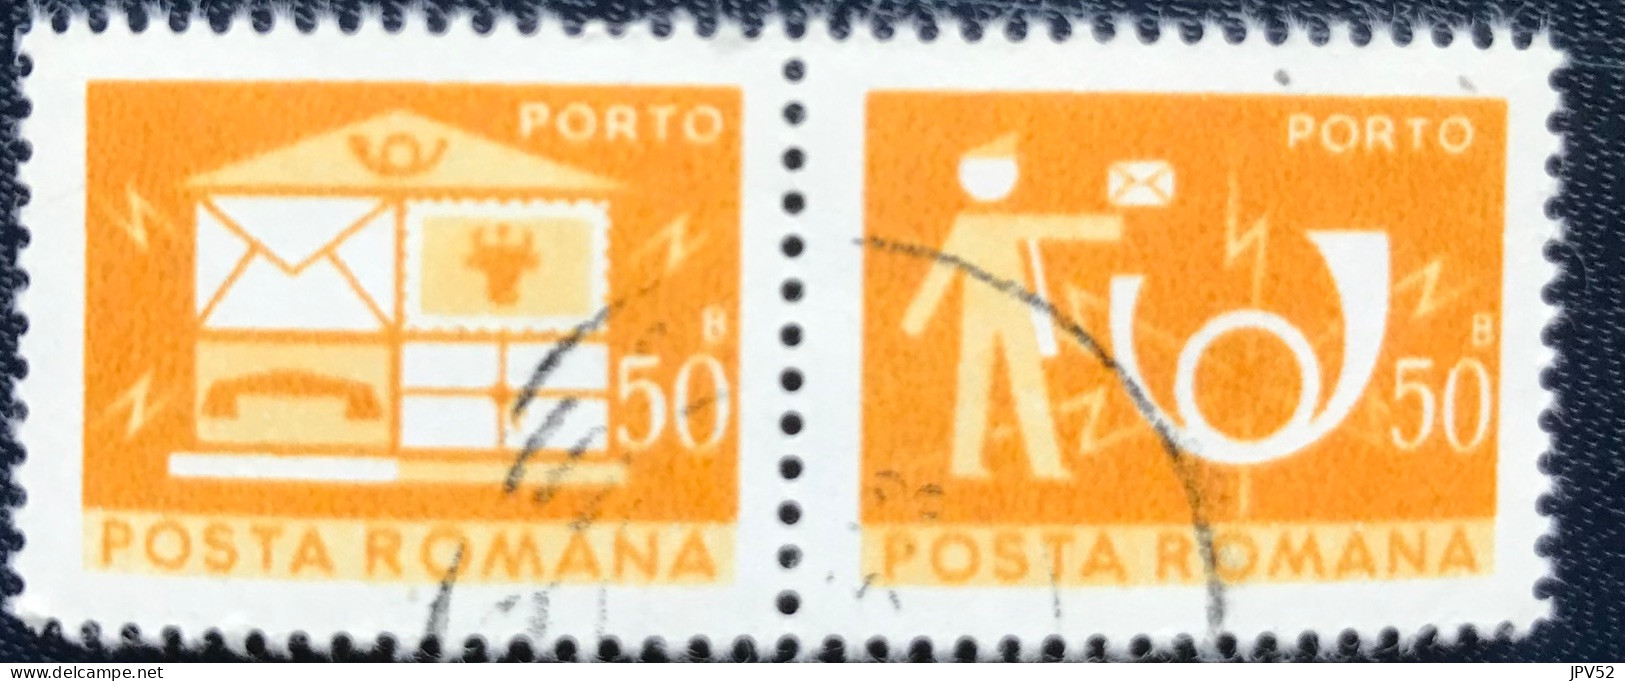 Romana - Roemenië - C14/55 - 1982 - (°)used - Michel 126 - Brievenbus & Postbode & Posthoorn - Postage Due